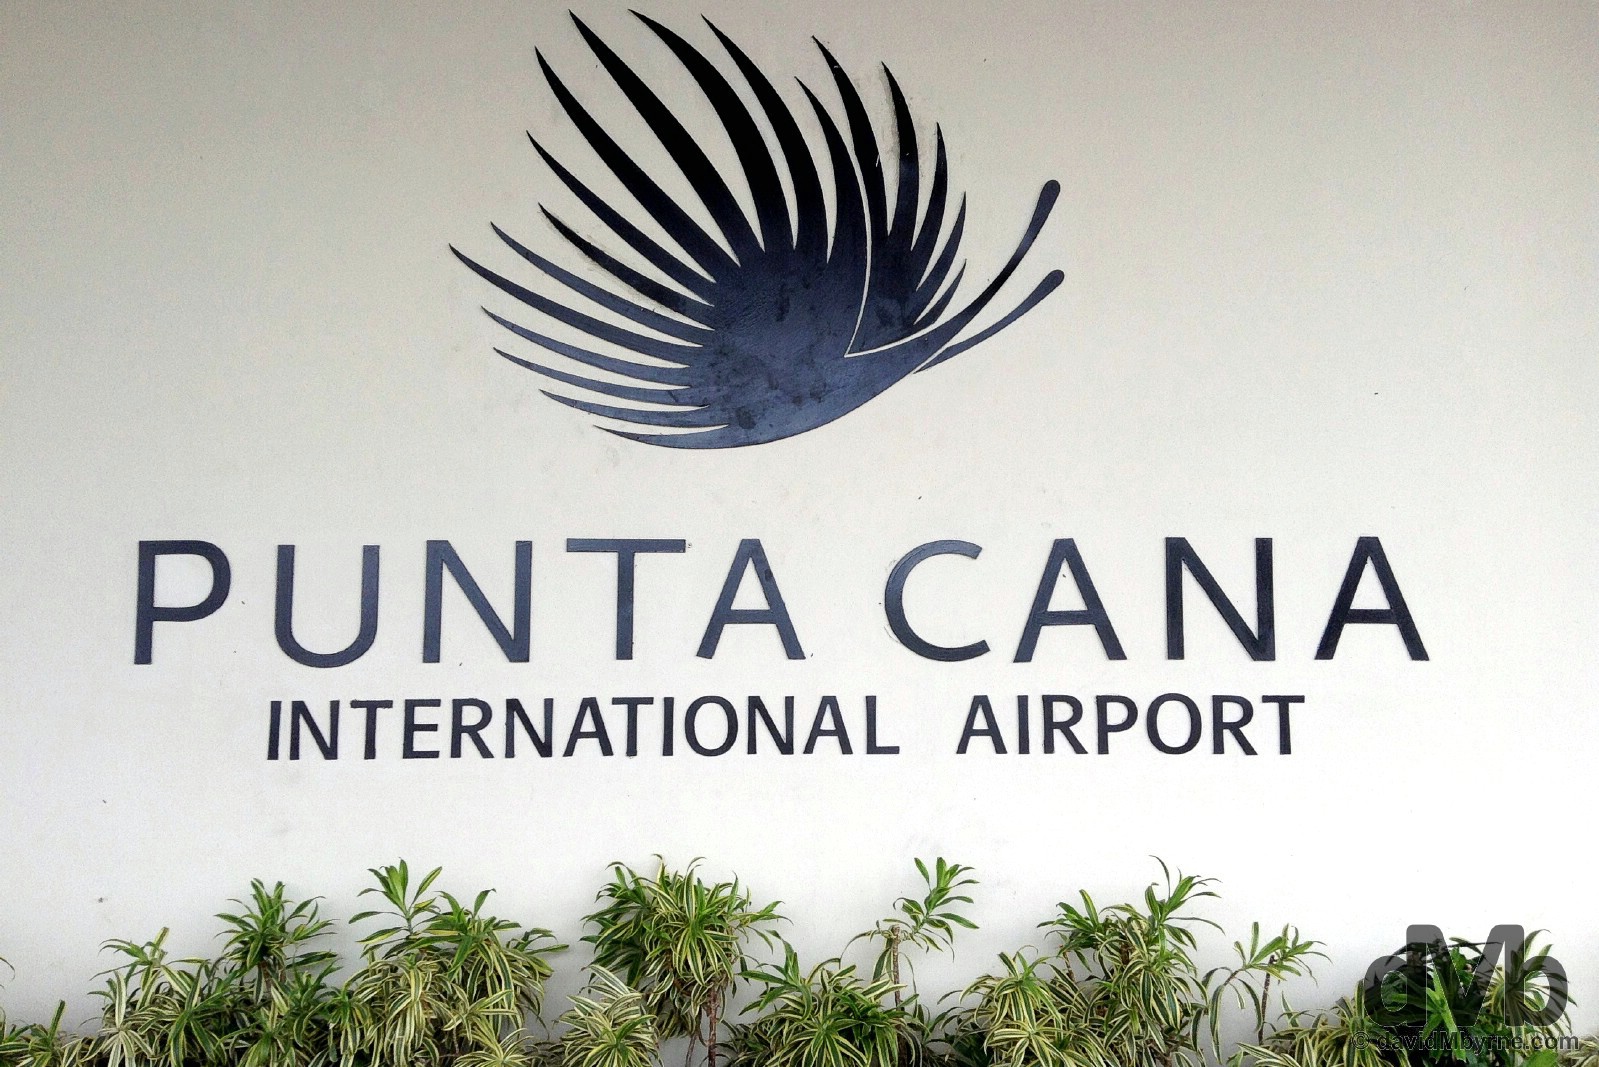 Punta Cana International Airport, Dominican Republic. May 29, 2015.